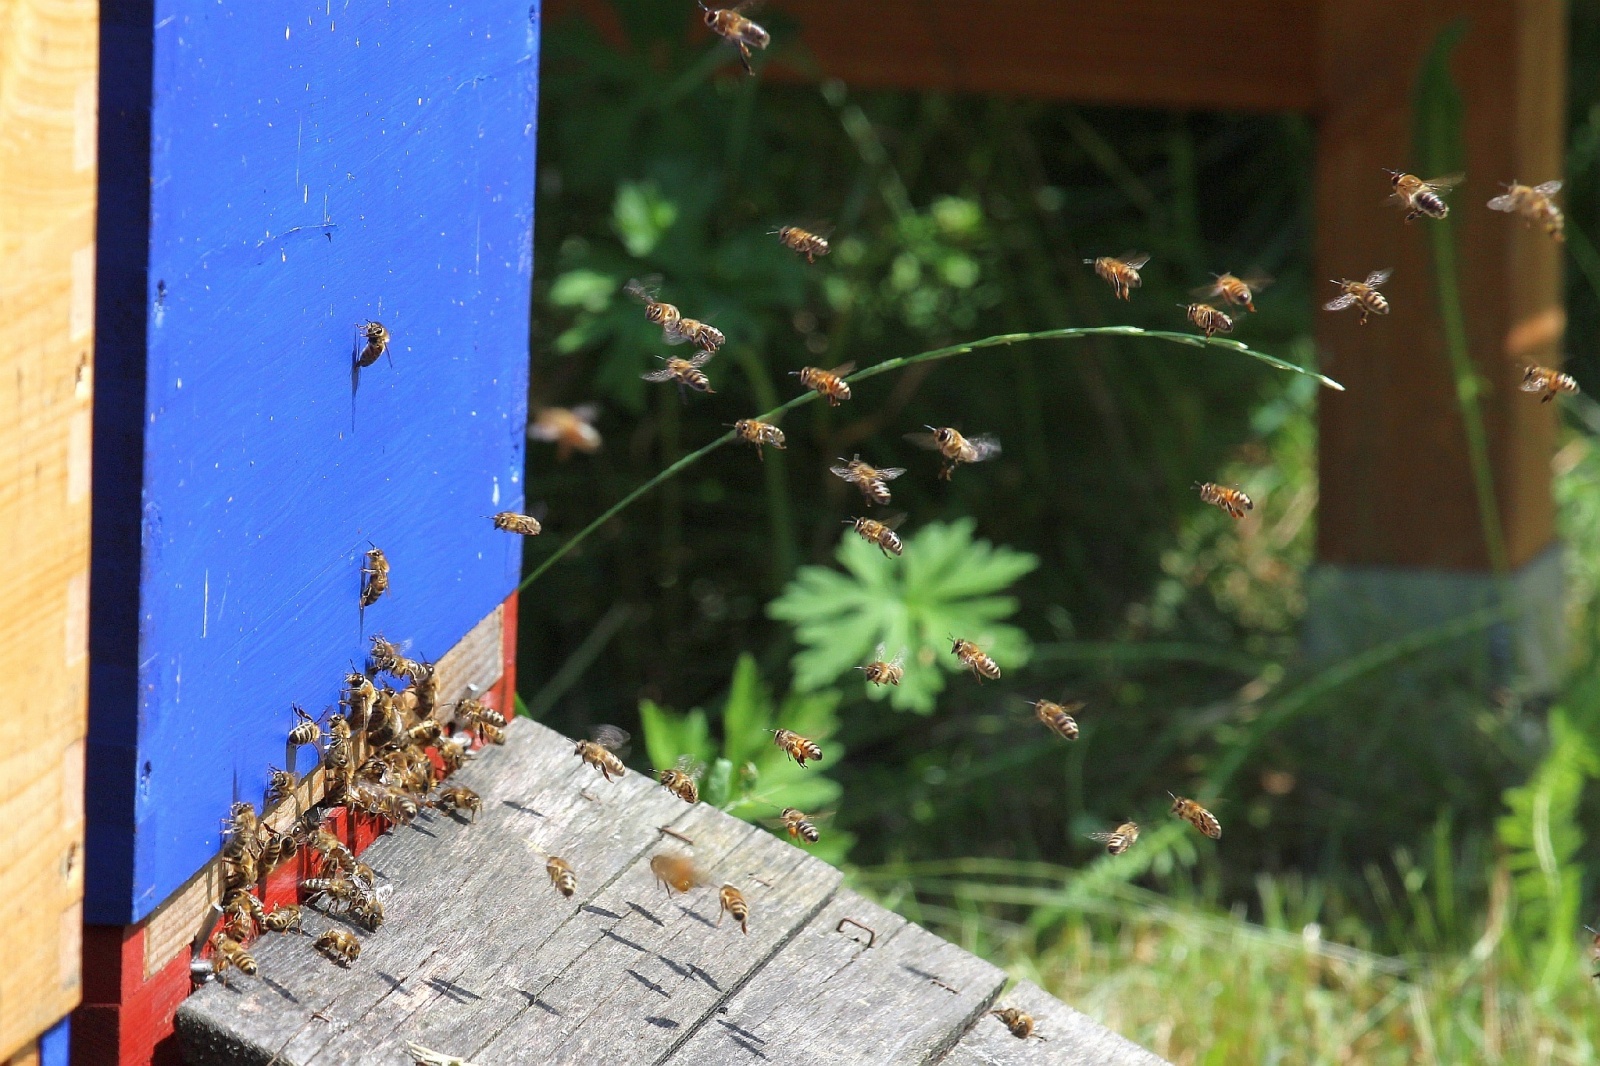 Noch mehr fleißige Honigbienen, Bild: Bernd Sprenger